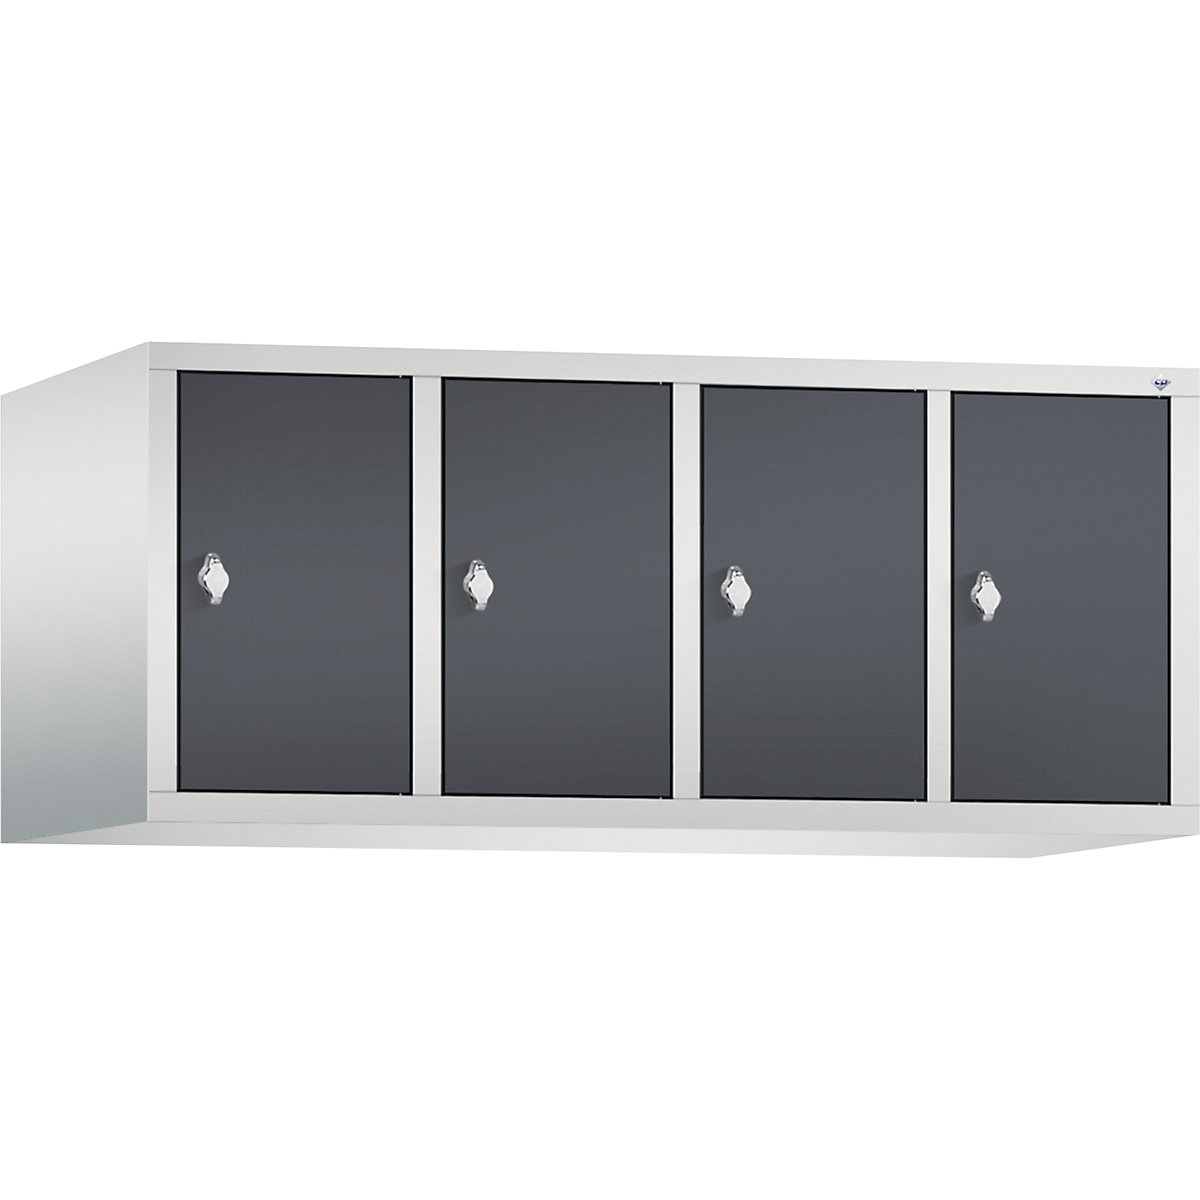 C+P – Altillo CLASSIC, 4 compartimentos, anchura de compartimento 300 mm, gris luminoso / gris negruzco